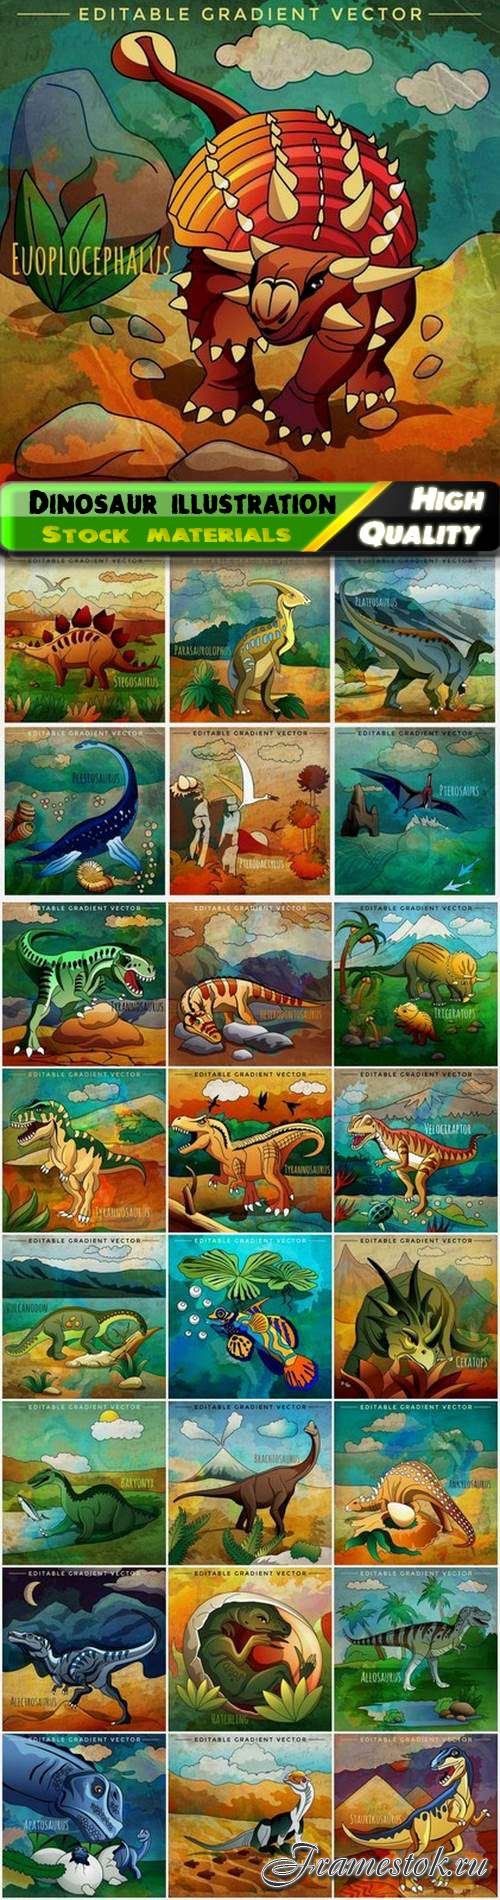 Prehistoric animal and jurassic period dinosaur illustration - 25 Eps